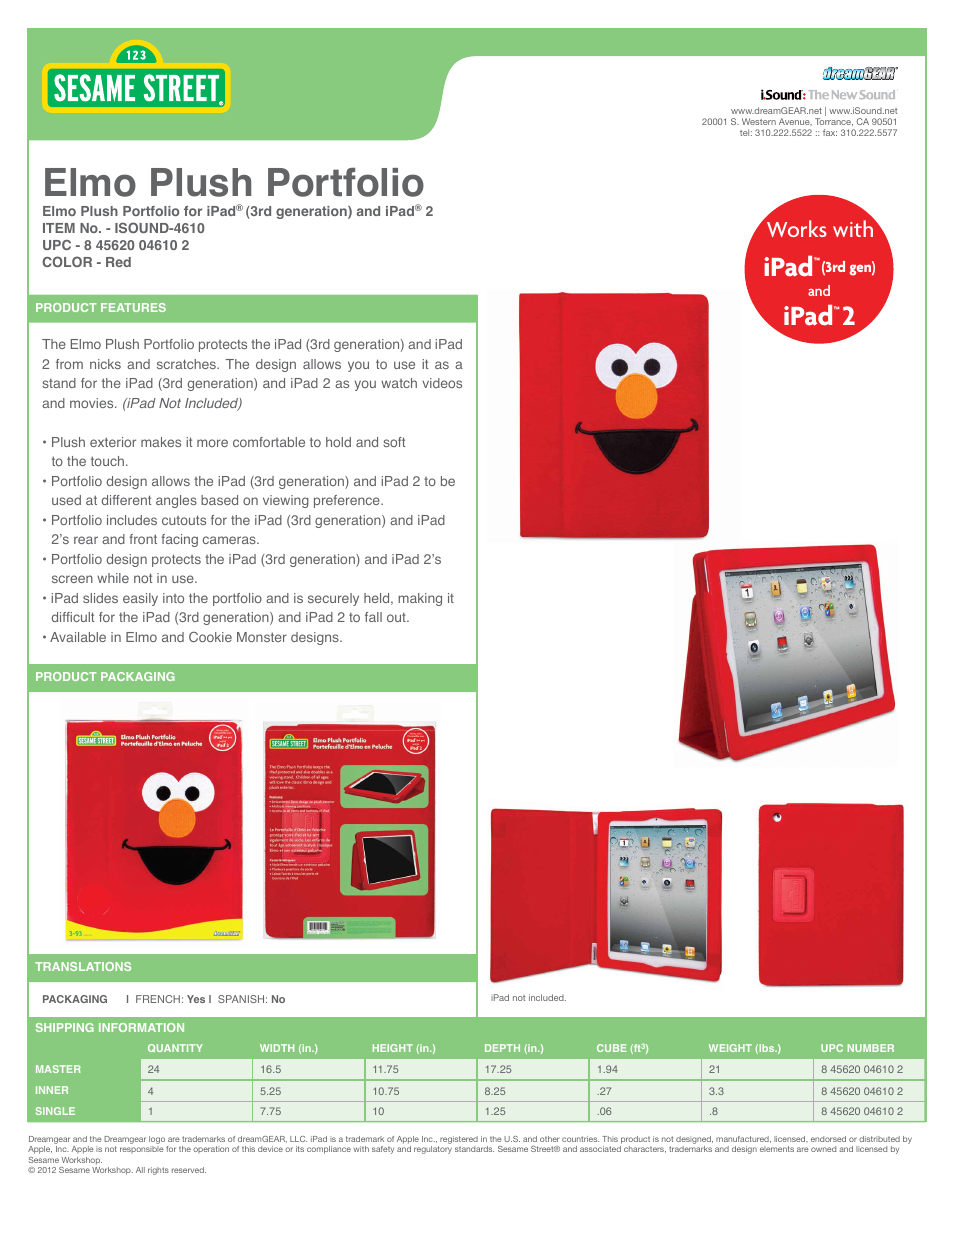 Elmo Plush Portfolio for iPad 2 - Sell Sheet